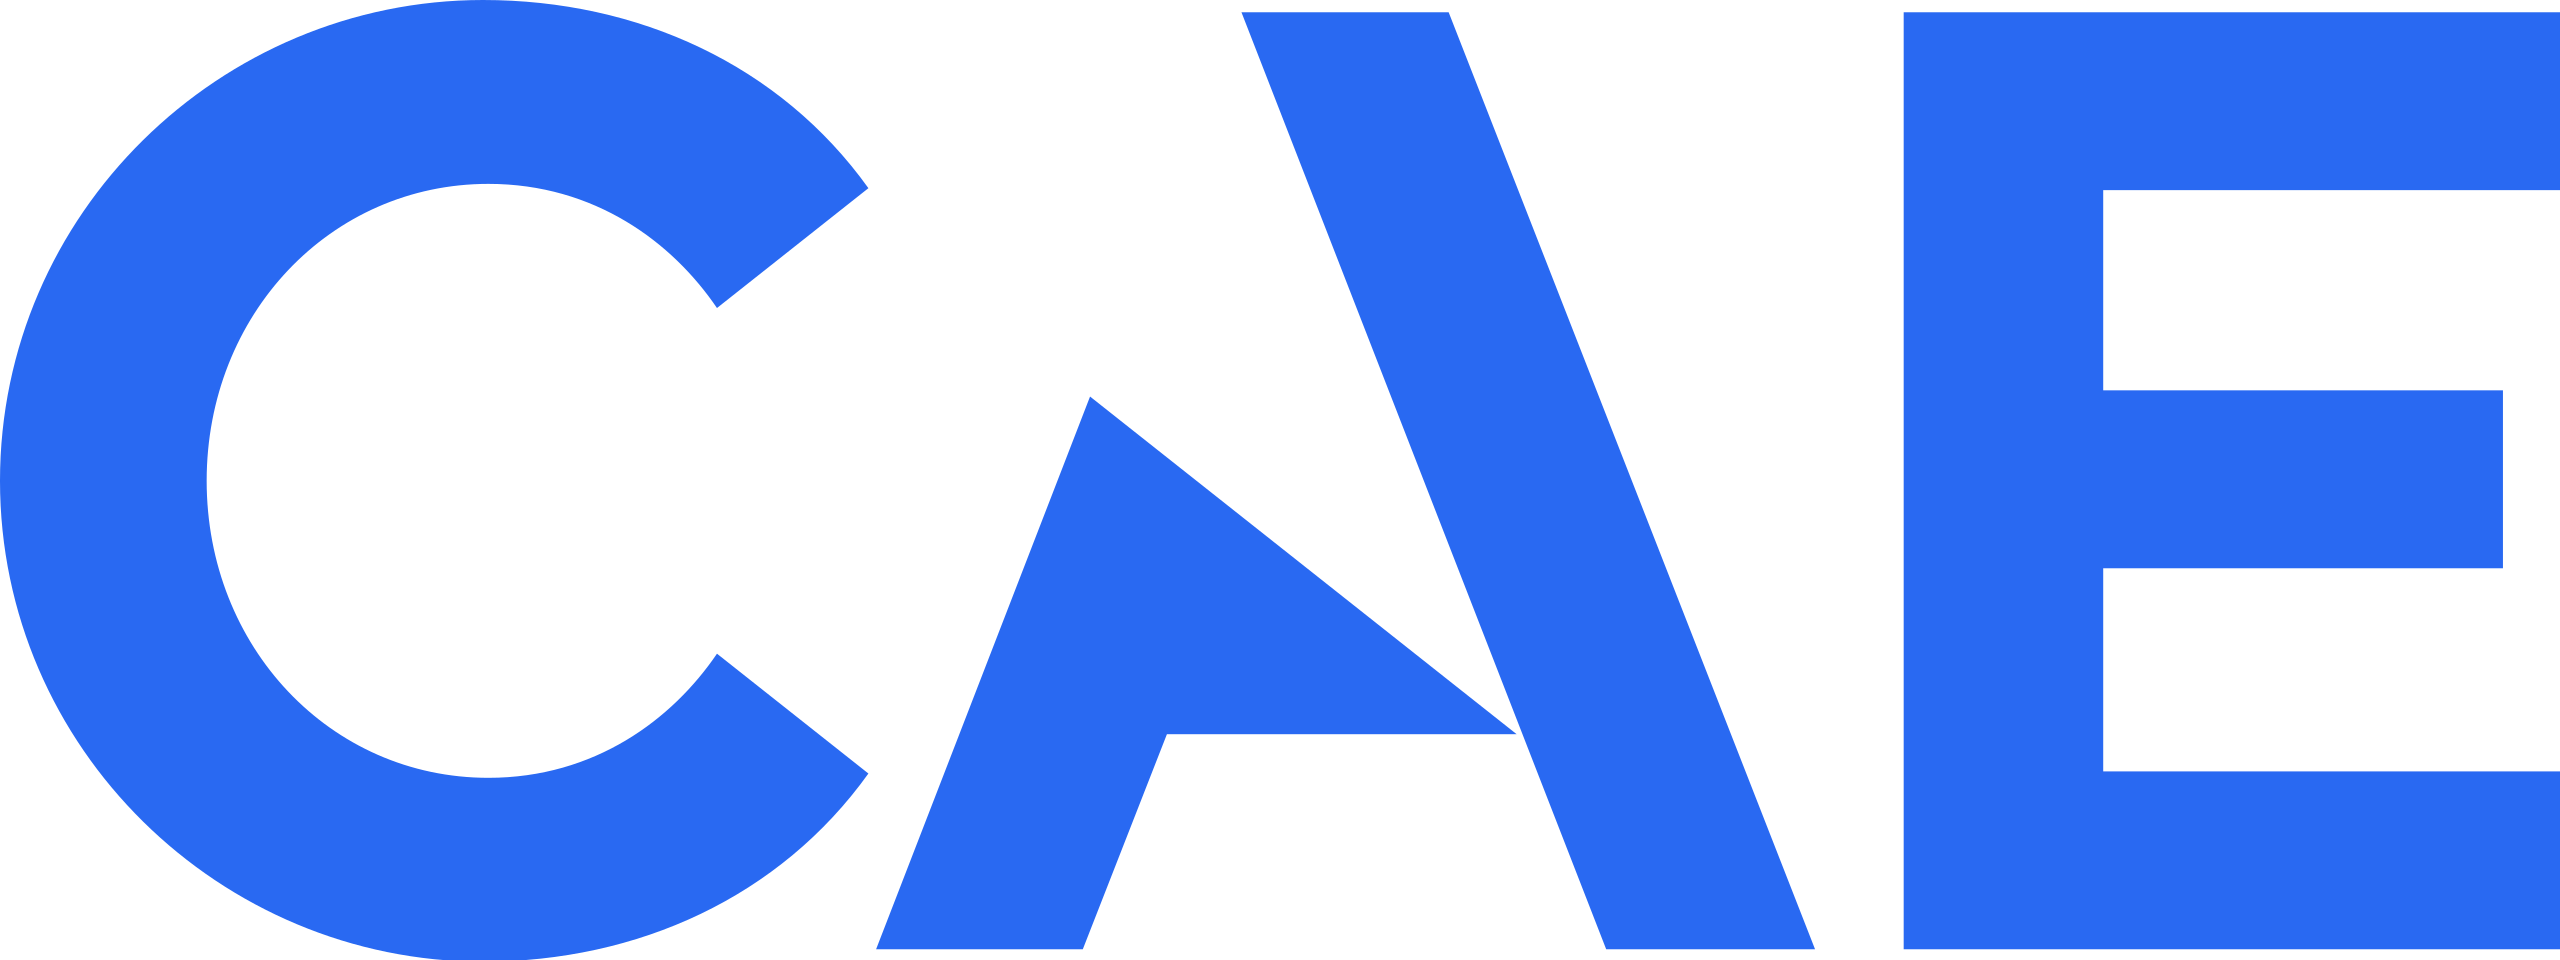 Inc logo. Логос CAE. Логос CAE лого. Логотипы 2022. Лого Фламп 2022.